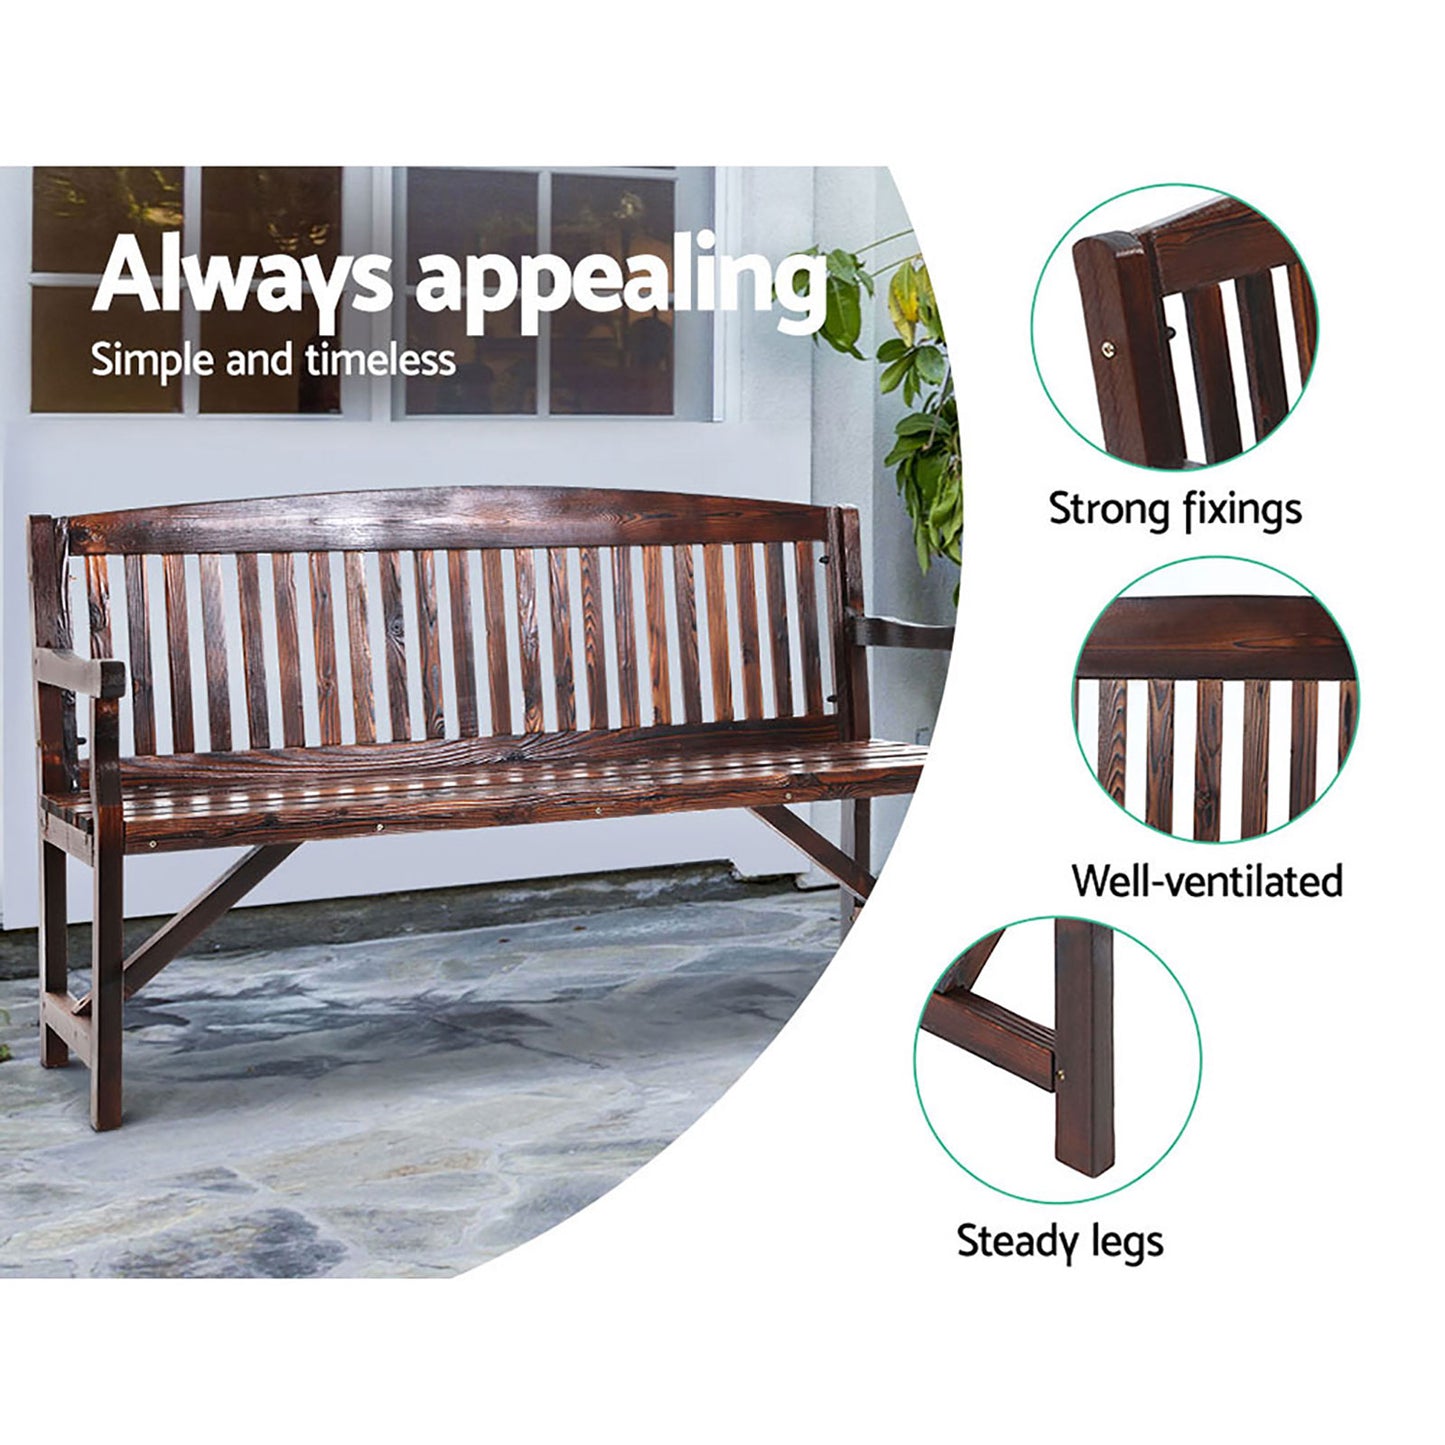 Solene Wooden Garden Bench Chair Natural Decor Patio Deck 3 Seater - Natural